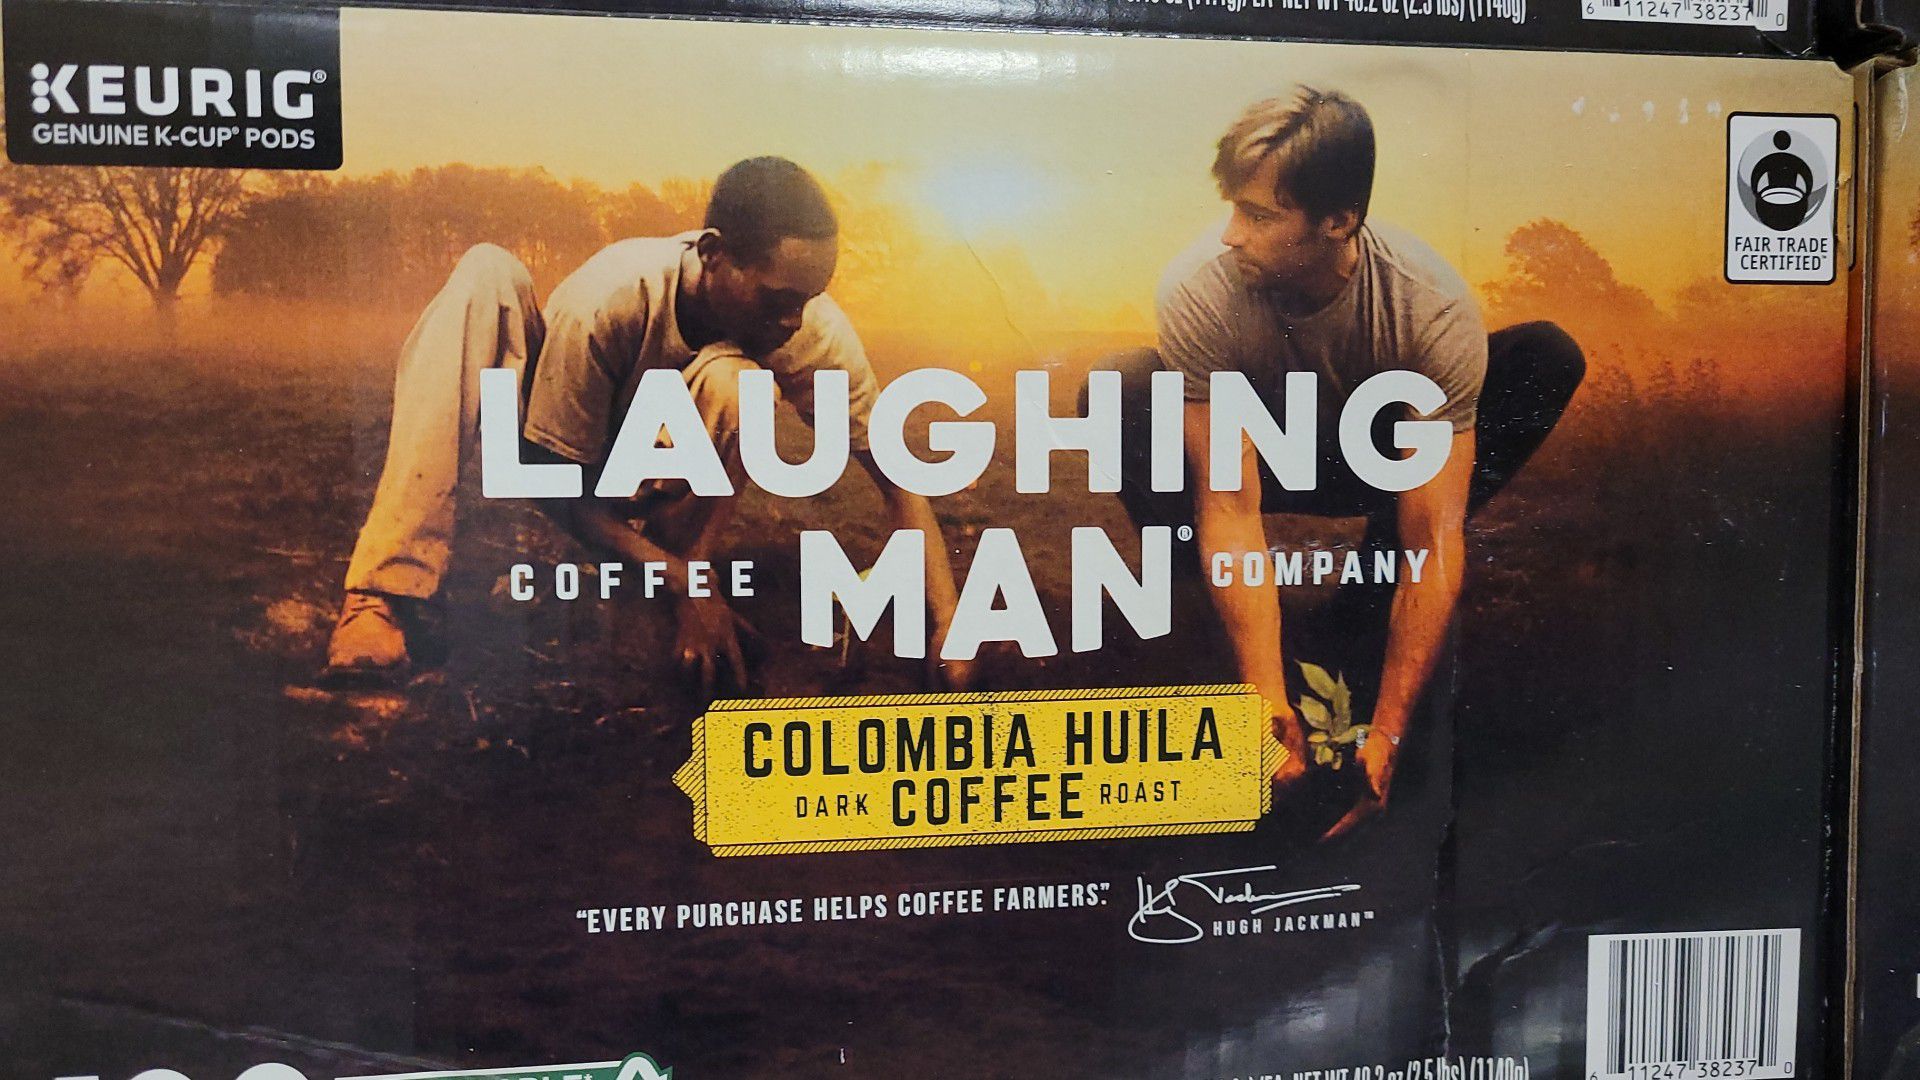 Coffee laughing man